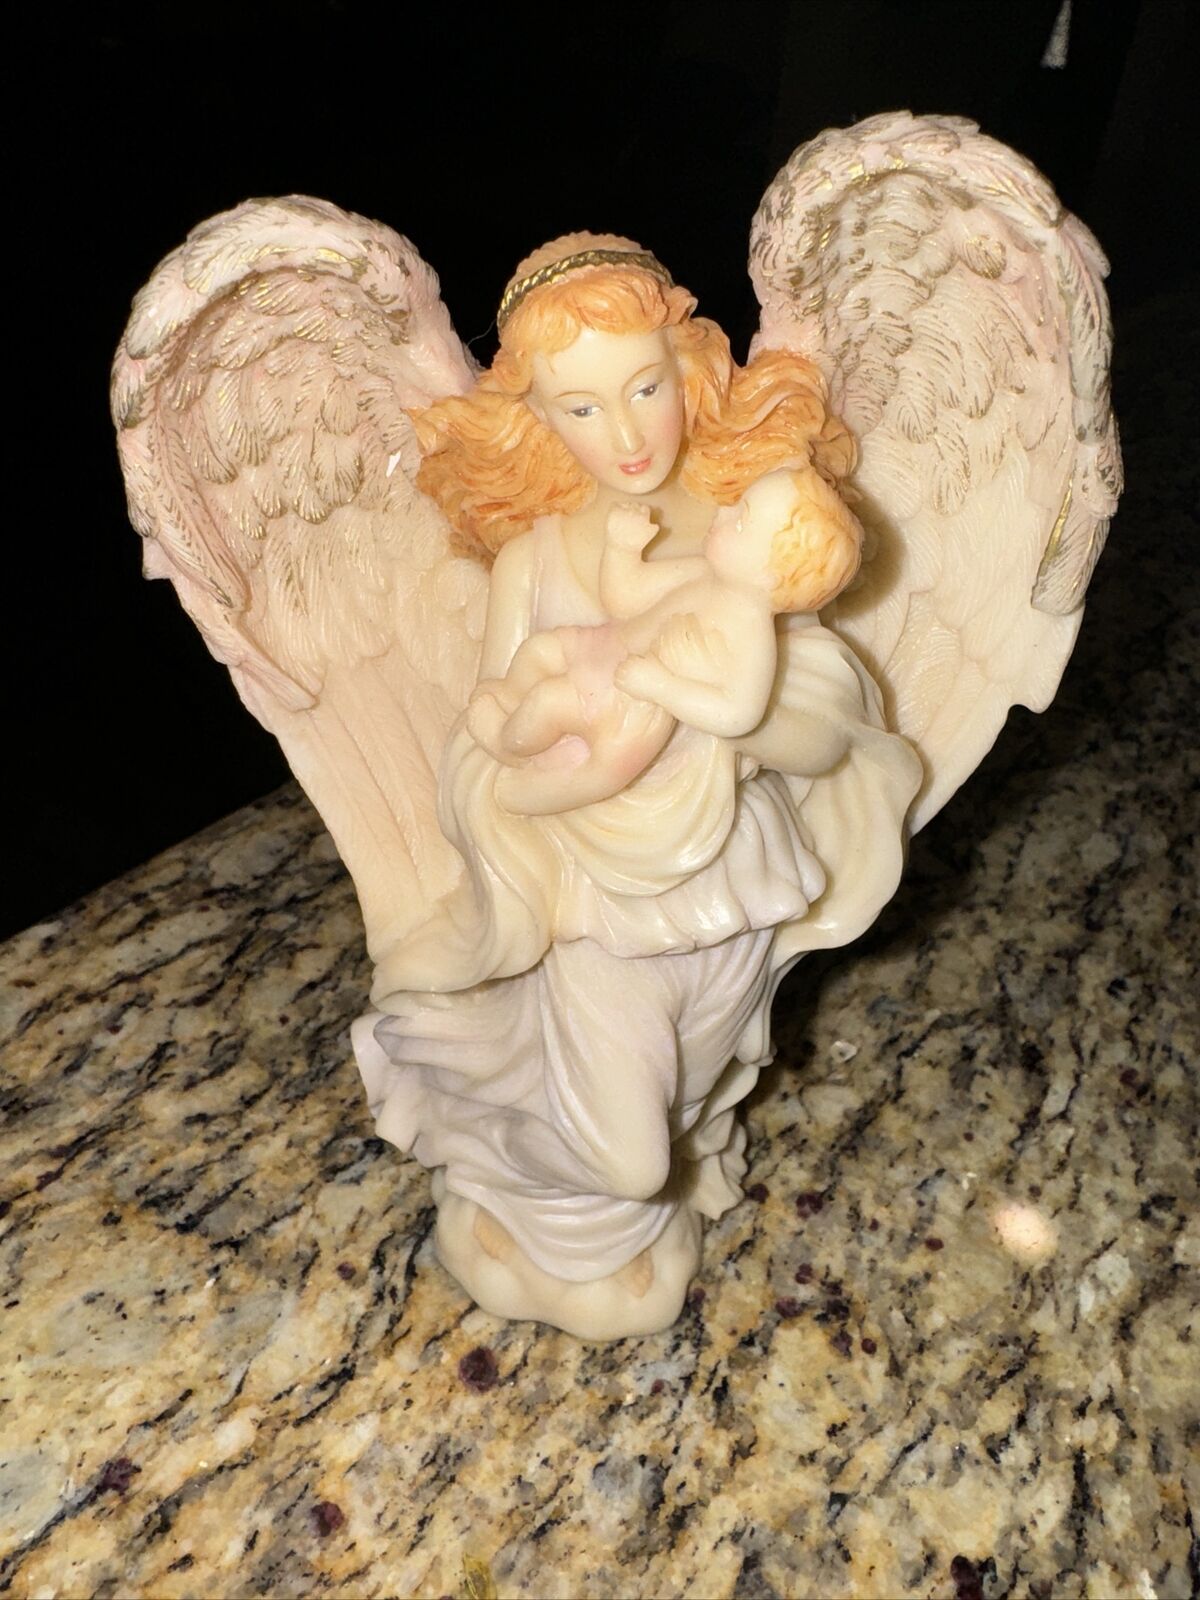 1994 Roman Inc Seraphim Classics Seraphina “Heavens Helper” Figurine